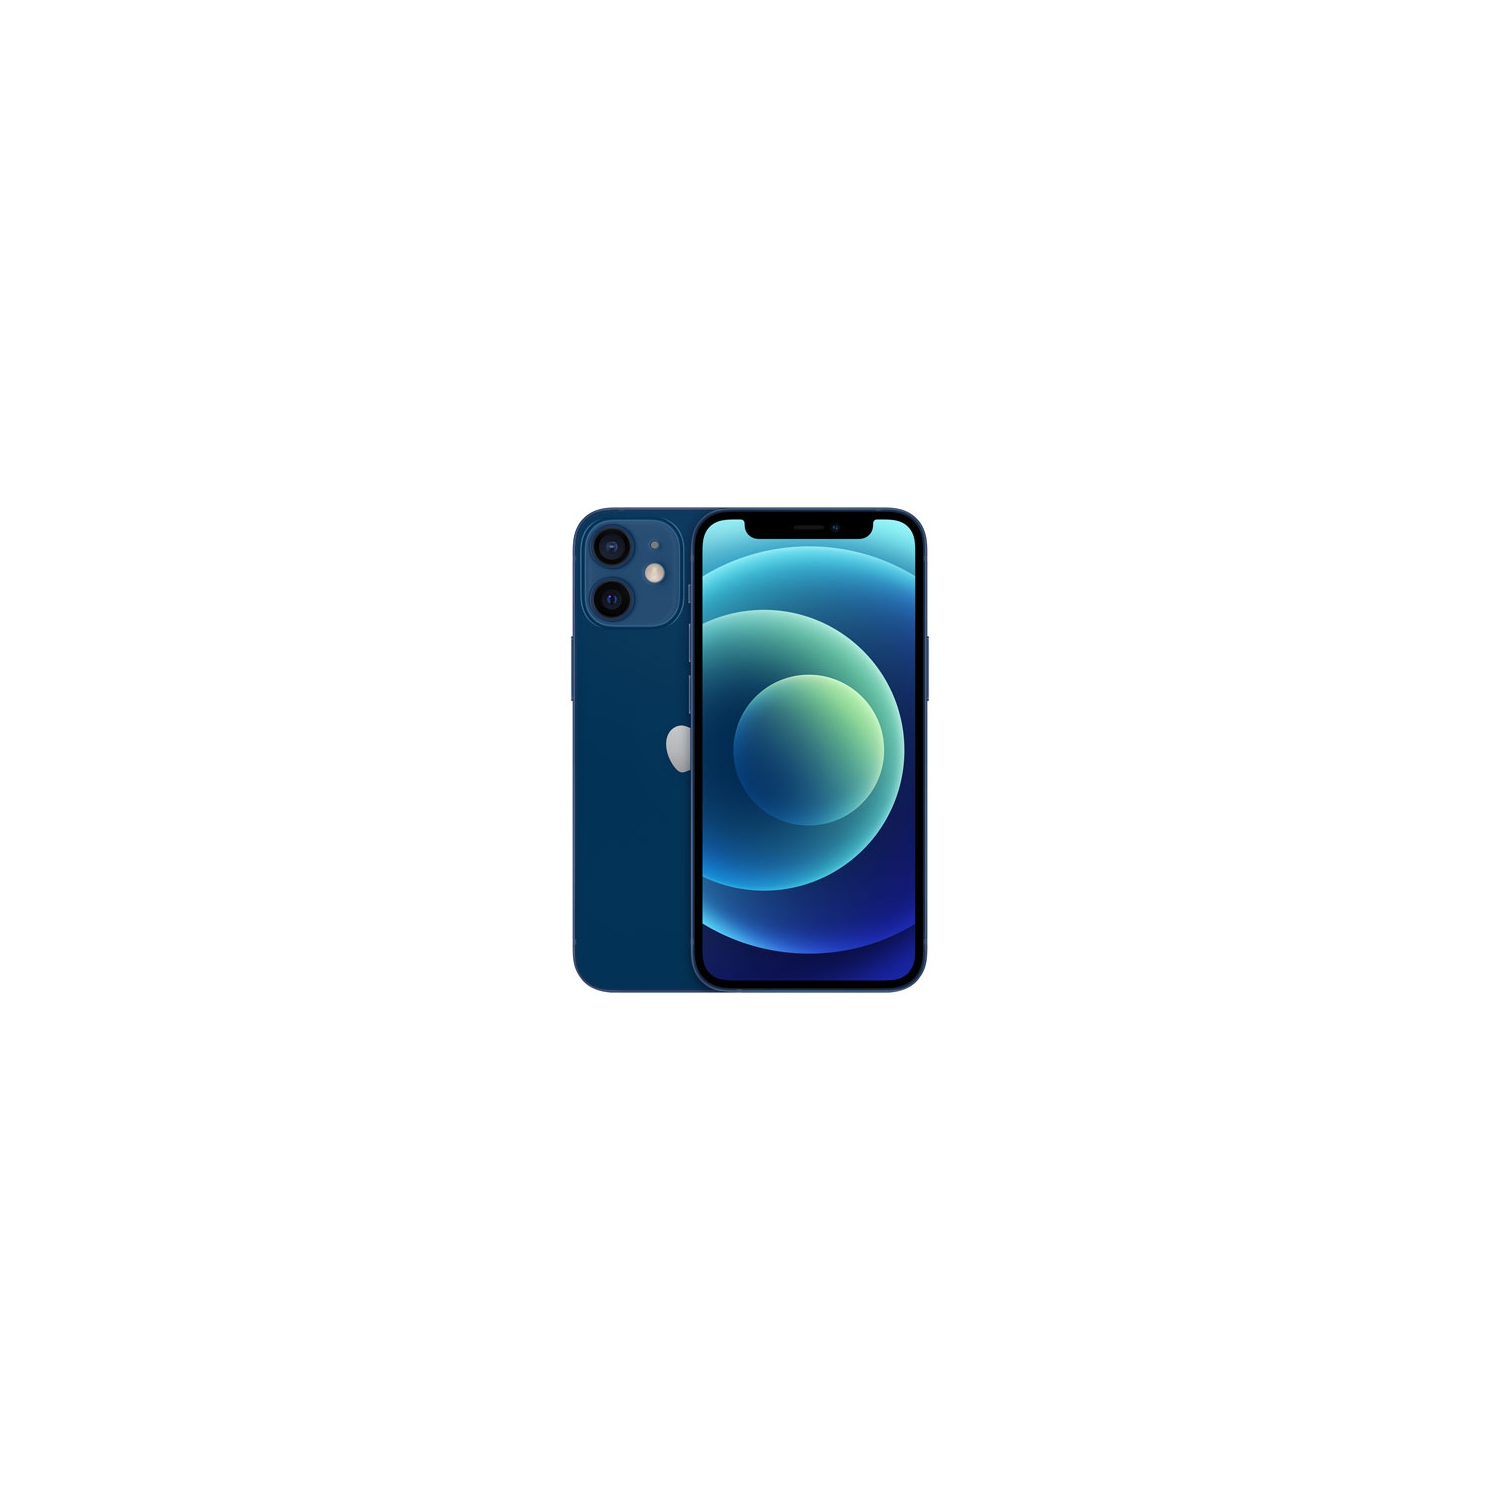 Apple iPhone 12 mini 64GB Smartphone - Blue - Unlocked - Open Box